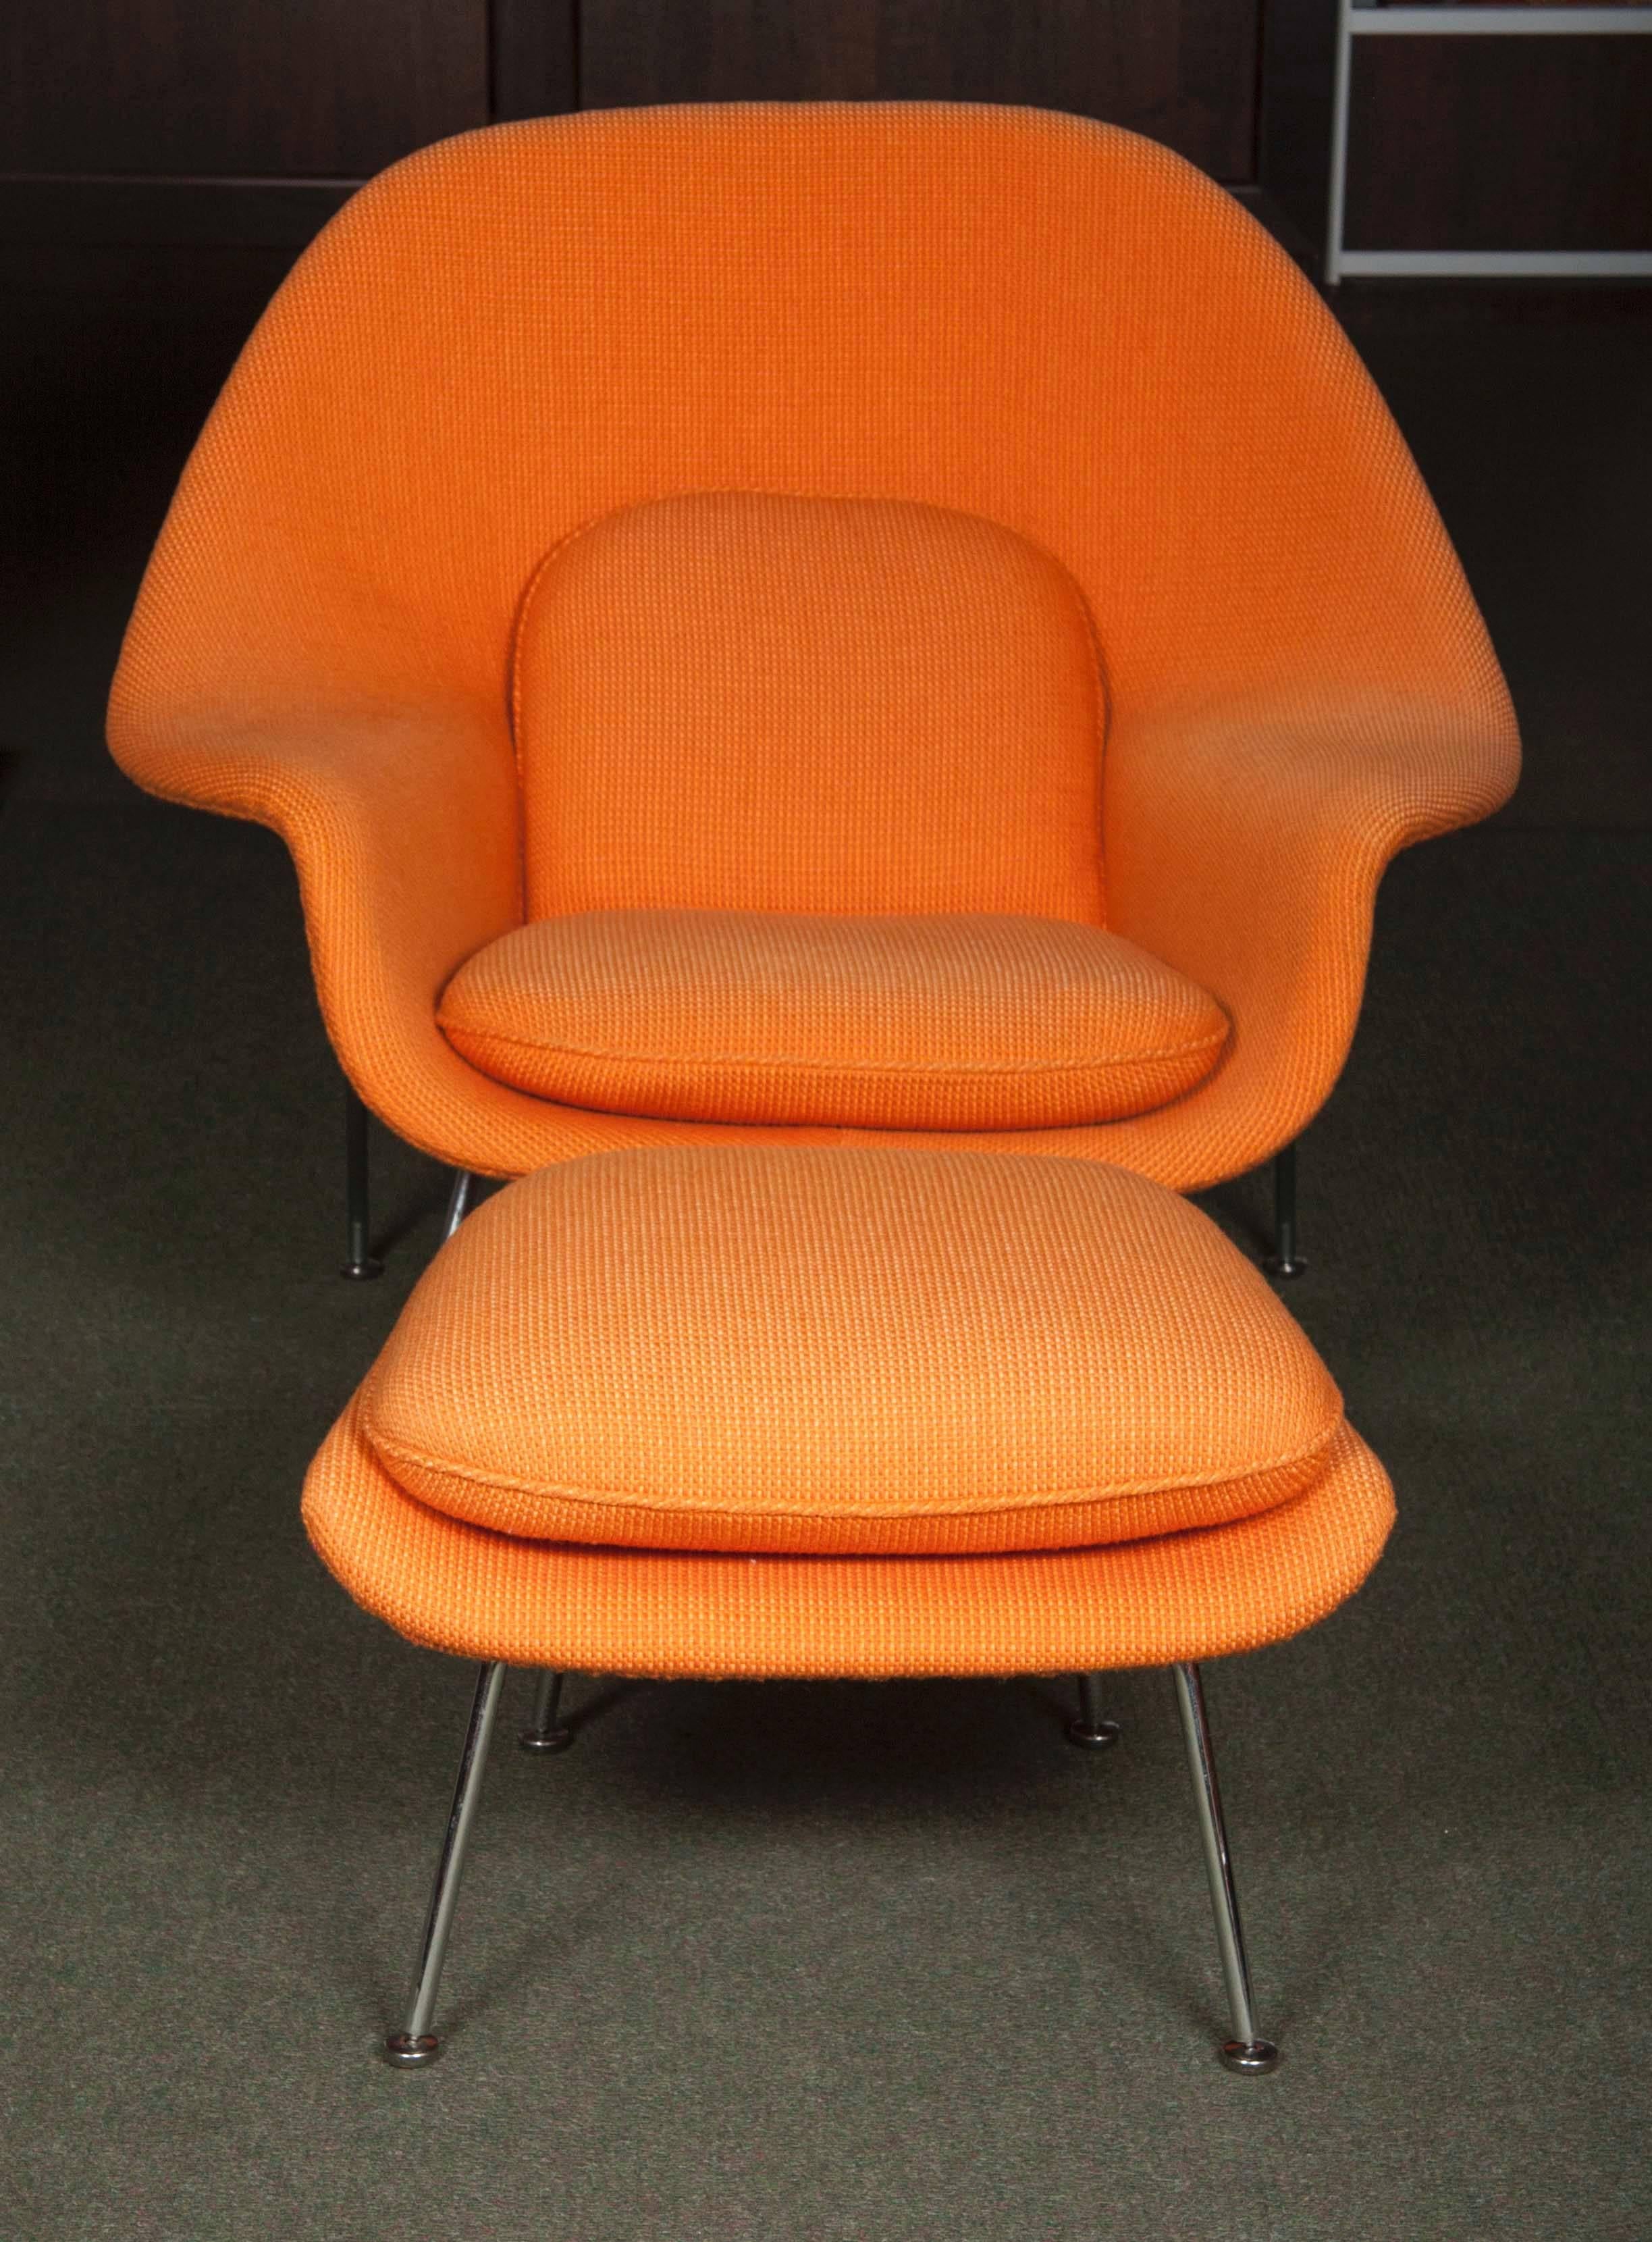 American Eero Saarinen 'Womb' Chair and Ottoman for Knoll